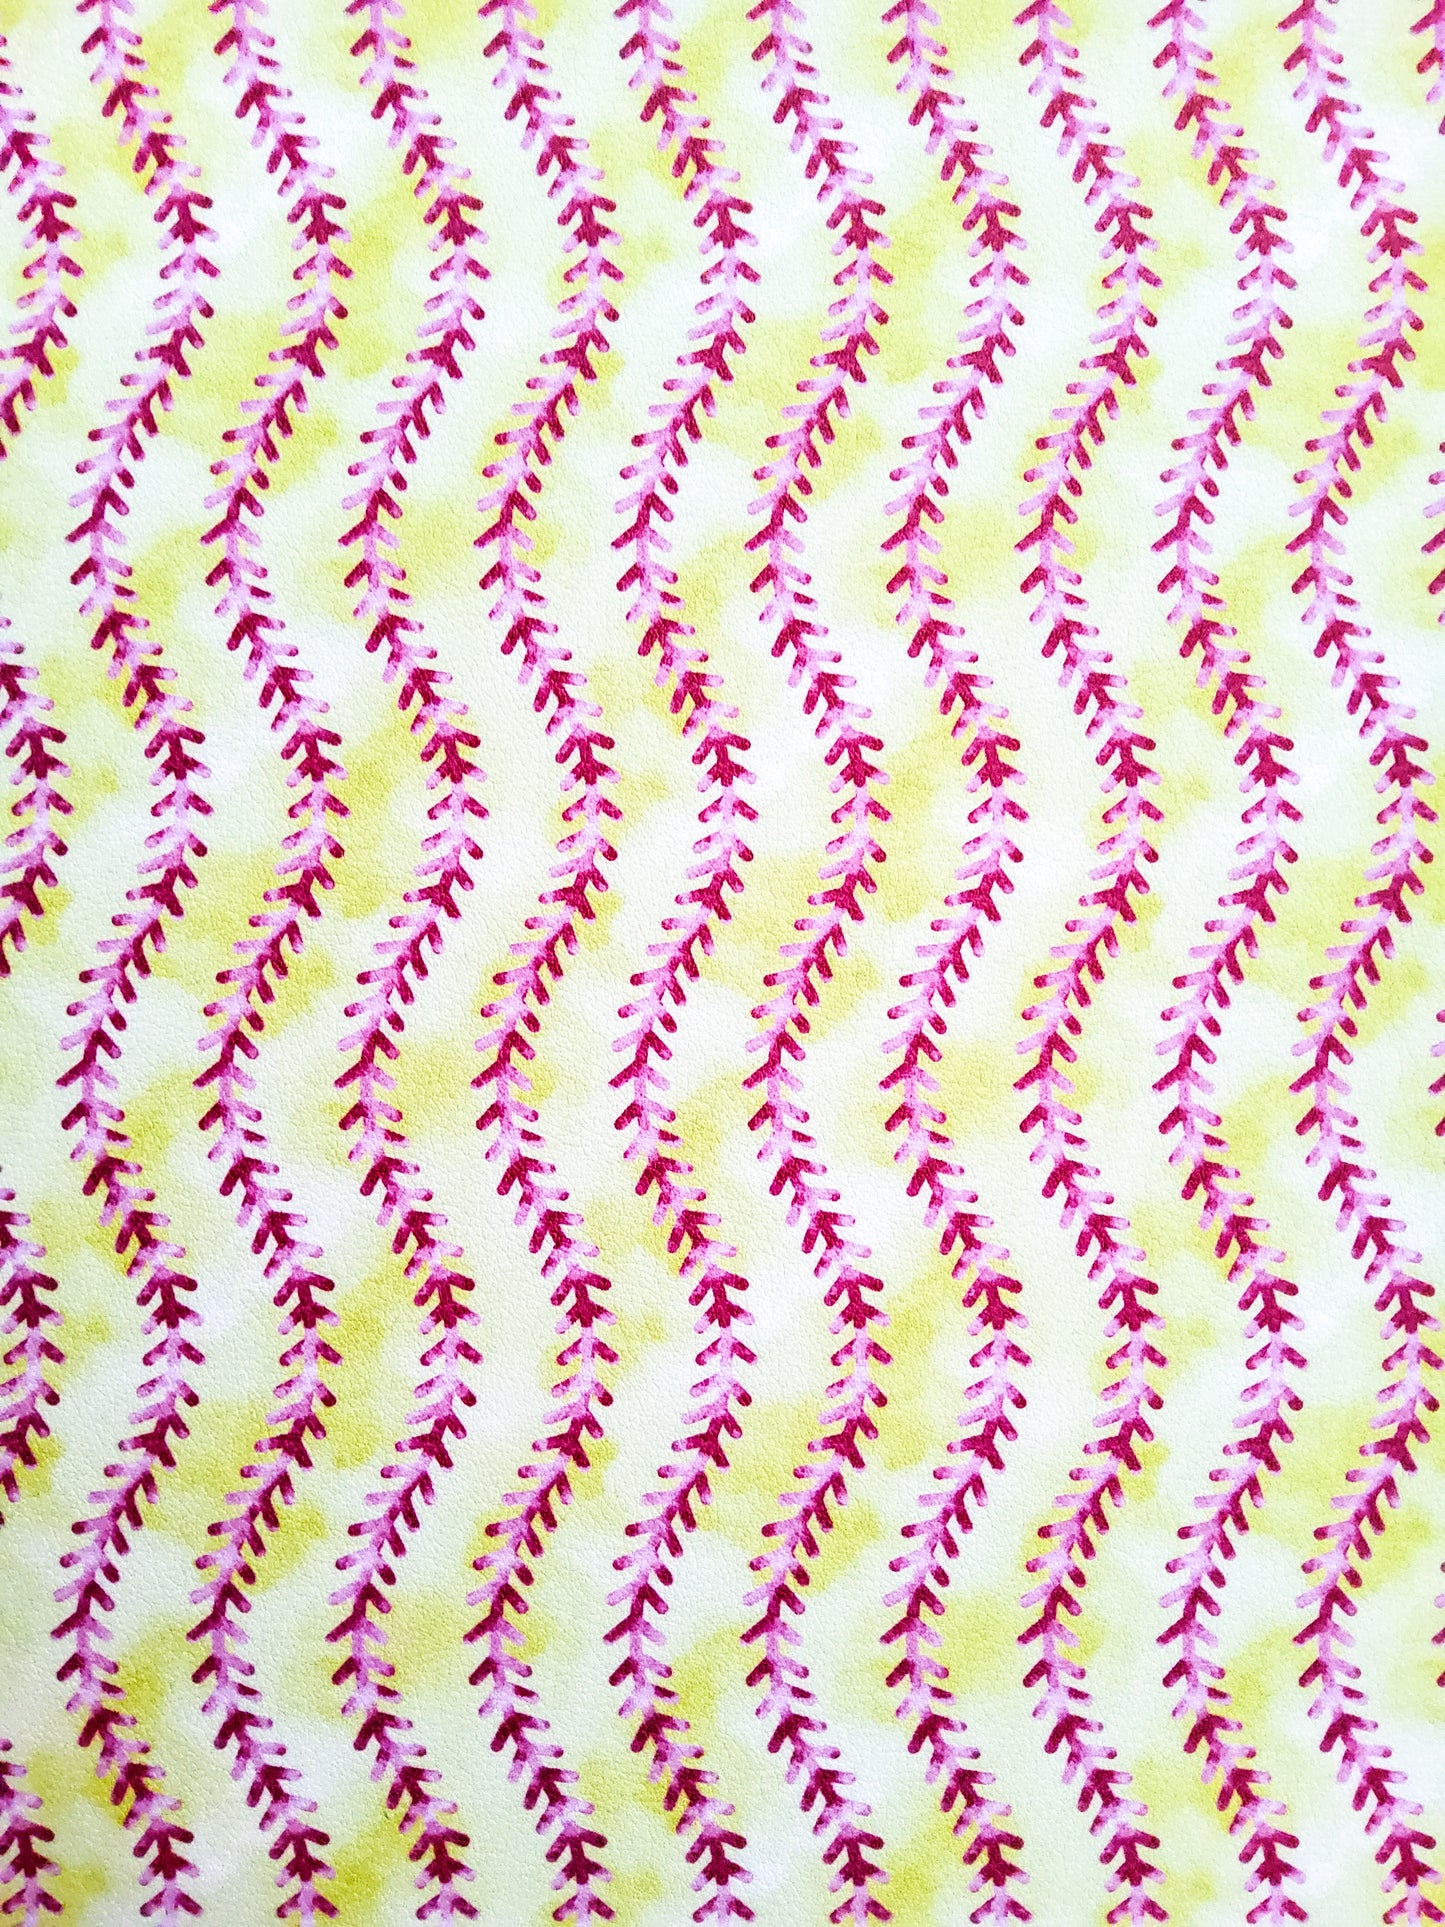 Softball Stitches 9x12 faux leather sheet